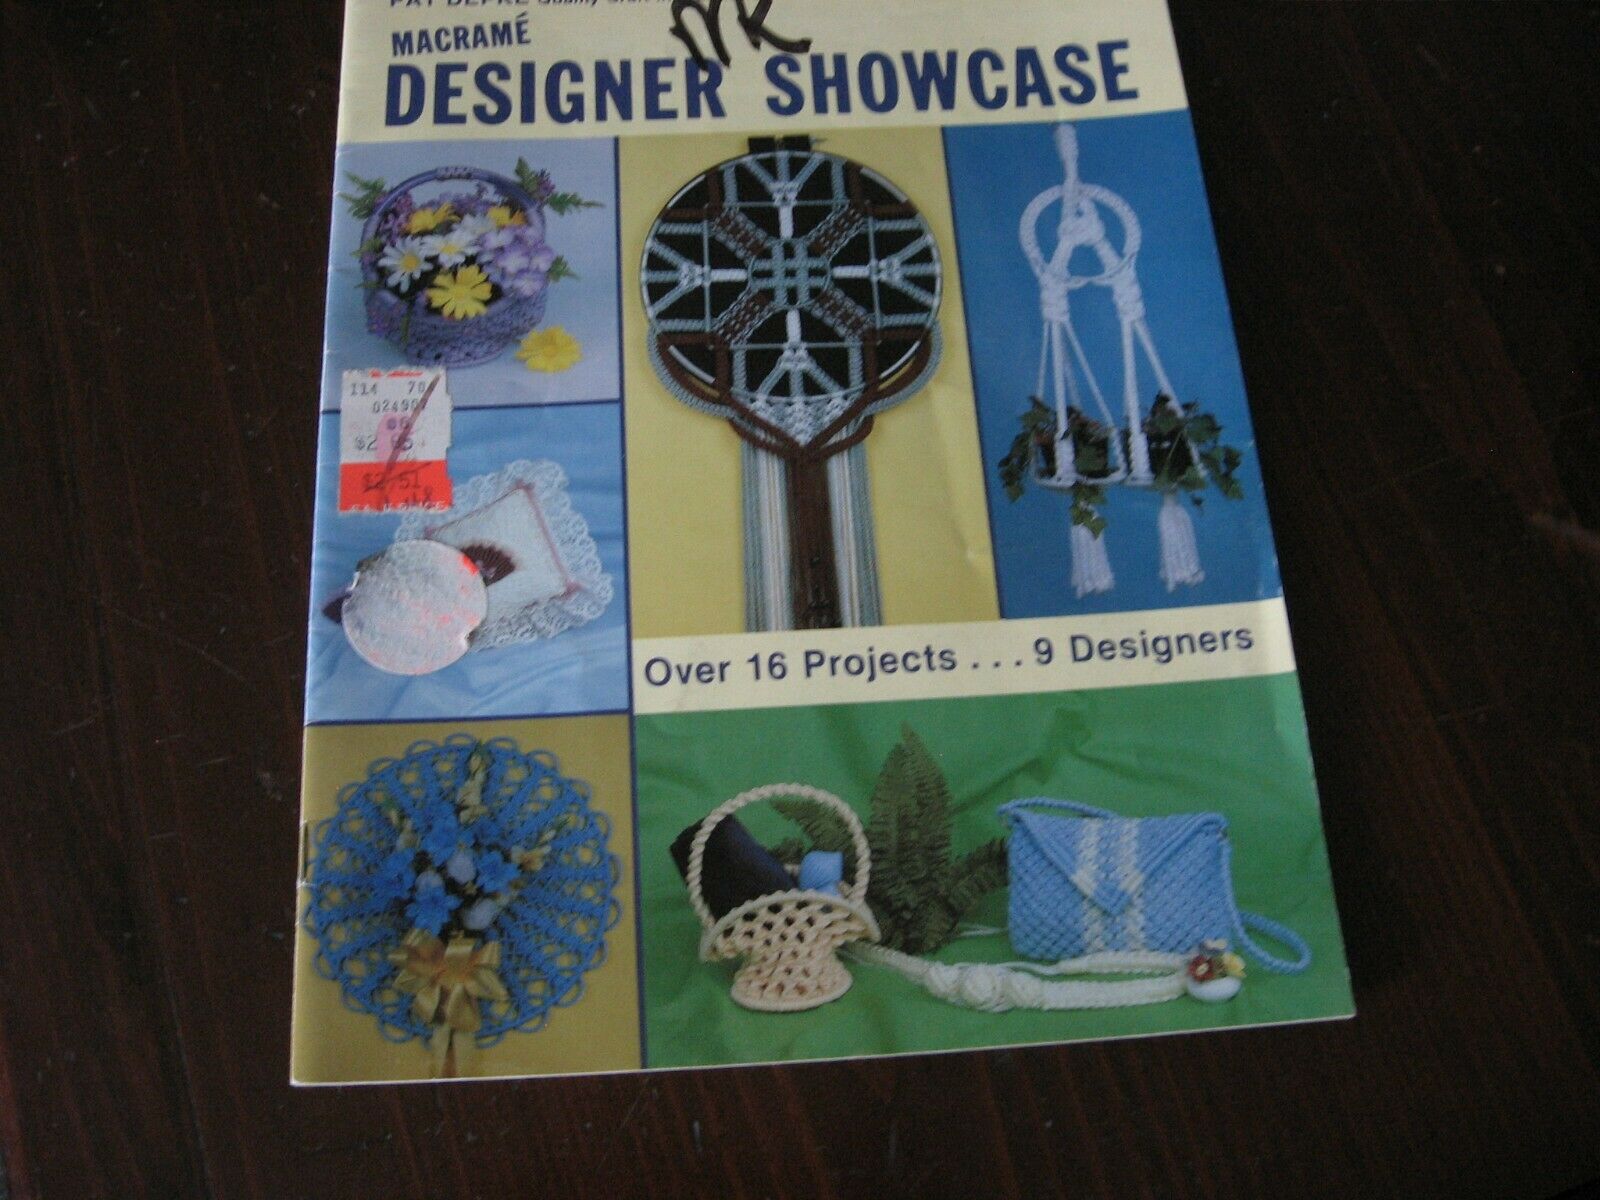 Macrame' Designer Showcase - 1983 - Pat Depke - Over 16 Projects - 9 Designers